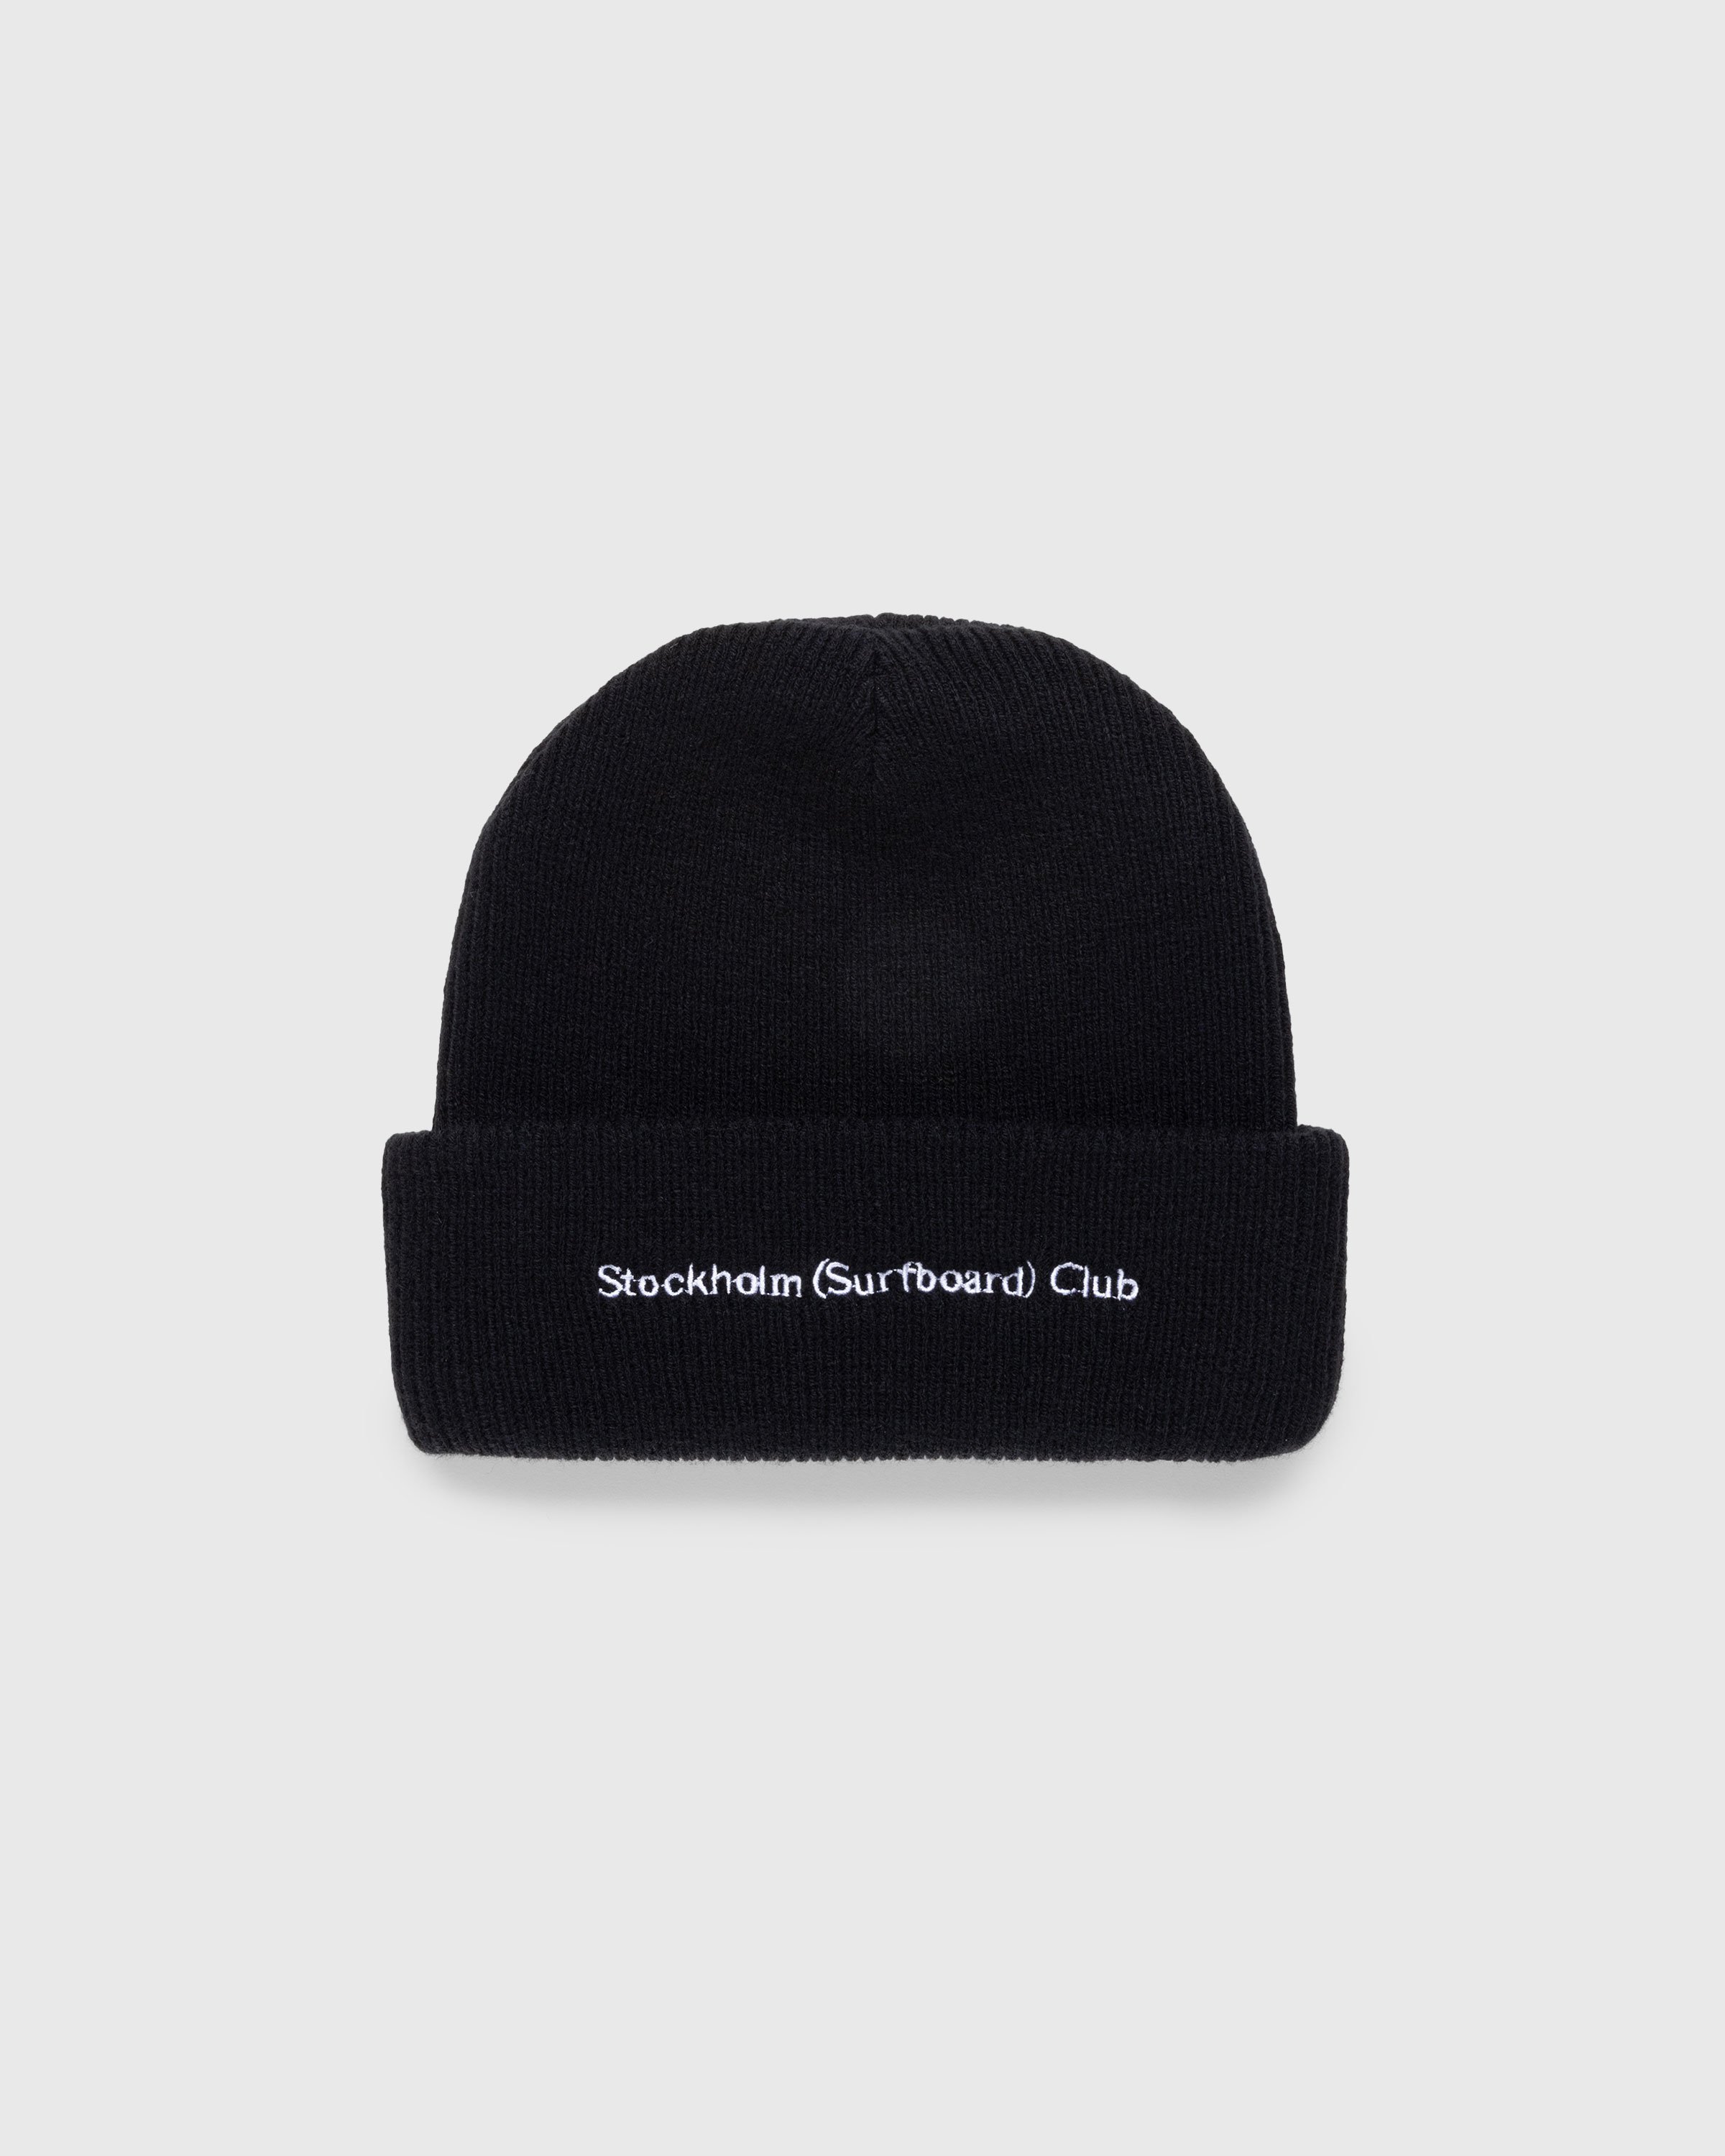 Stockholm Surfboard Club - Mossa Black Black - Accessories - Black - Image 1